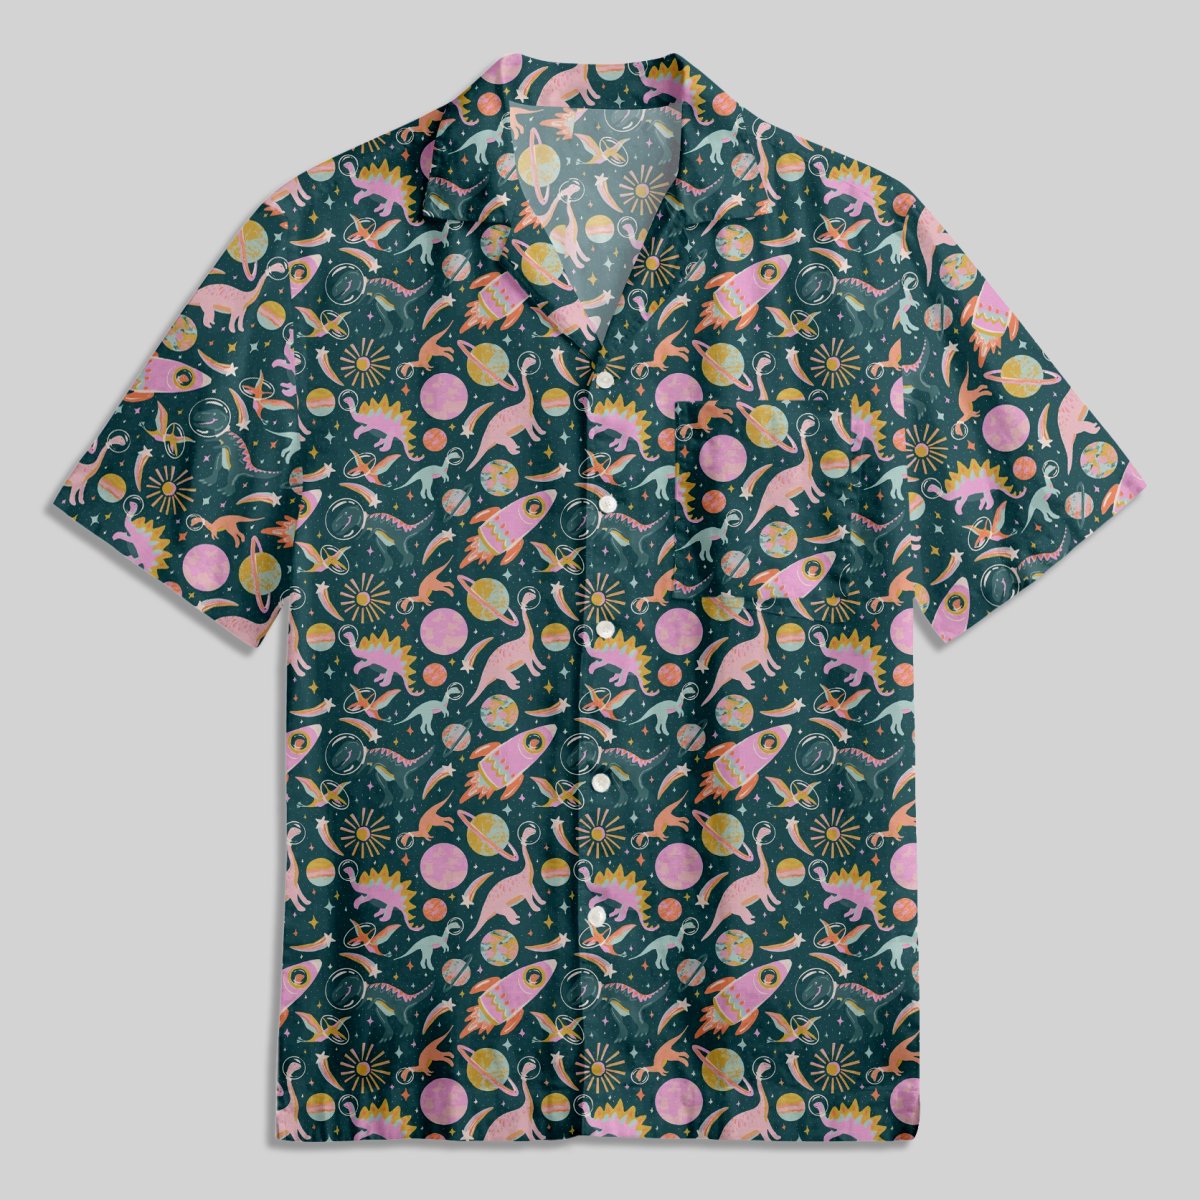 Colorful Dinosaur Planet Button Up Pocket Shirt - Geeksoutfit